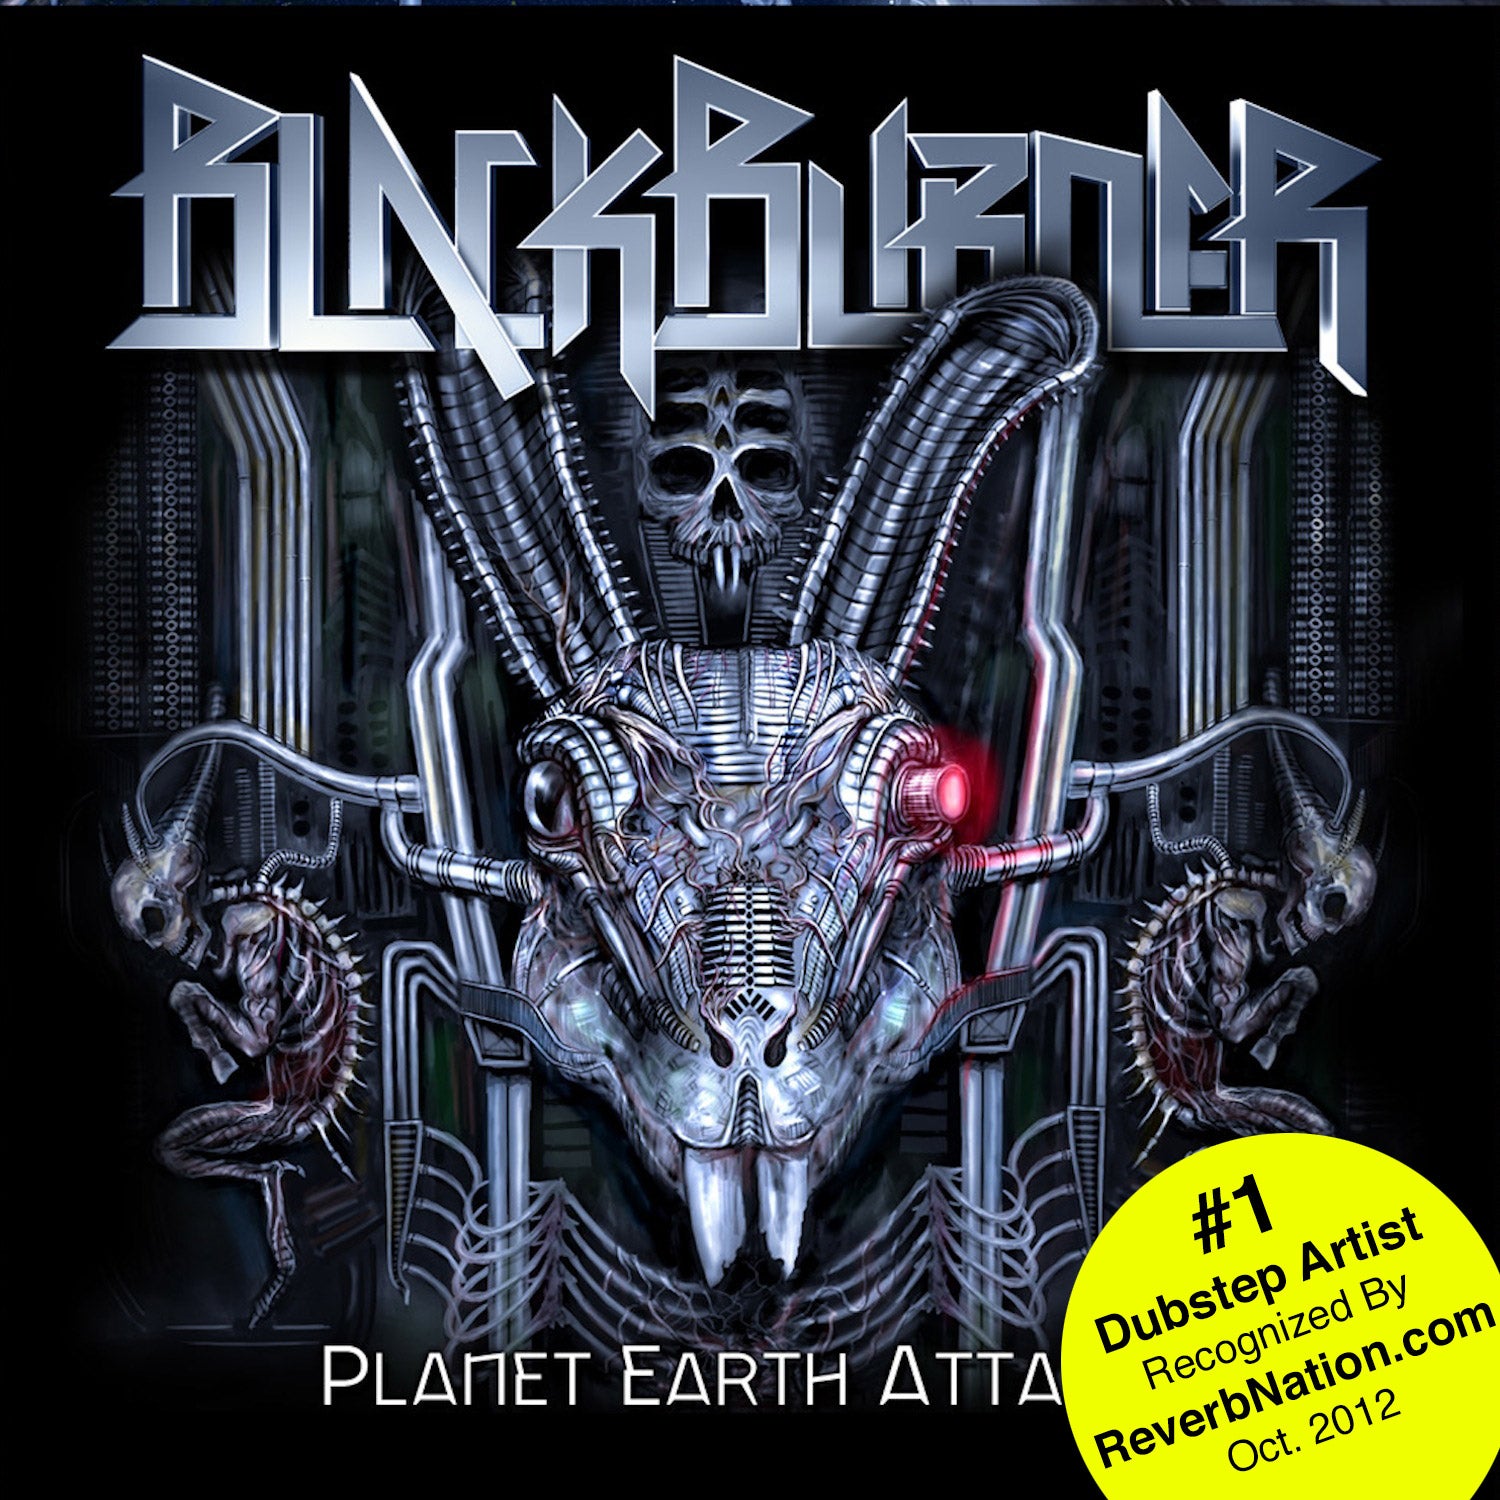 Blackburner - Planet Earth Attack